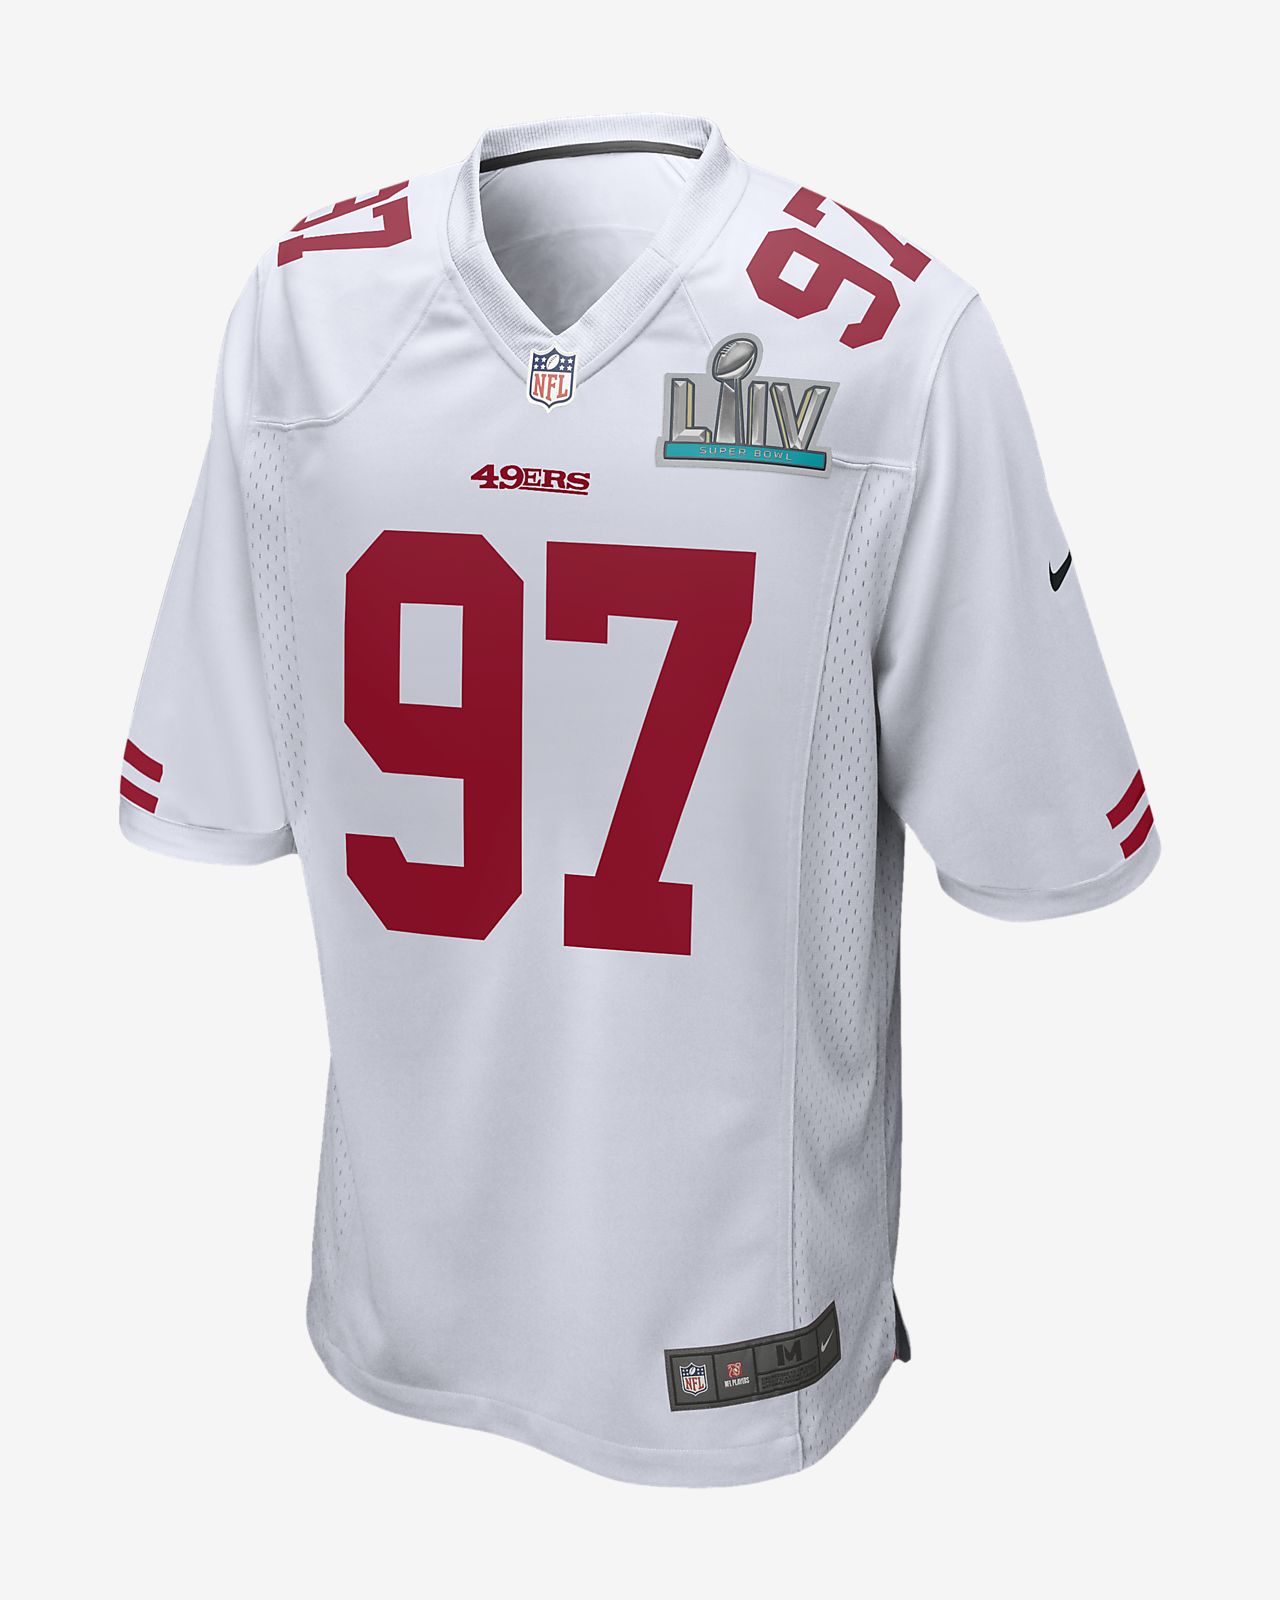 nfl shop 49ers jersey